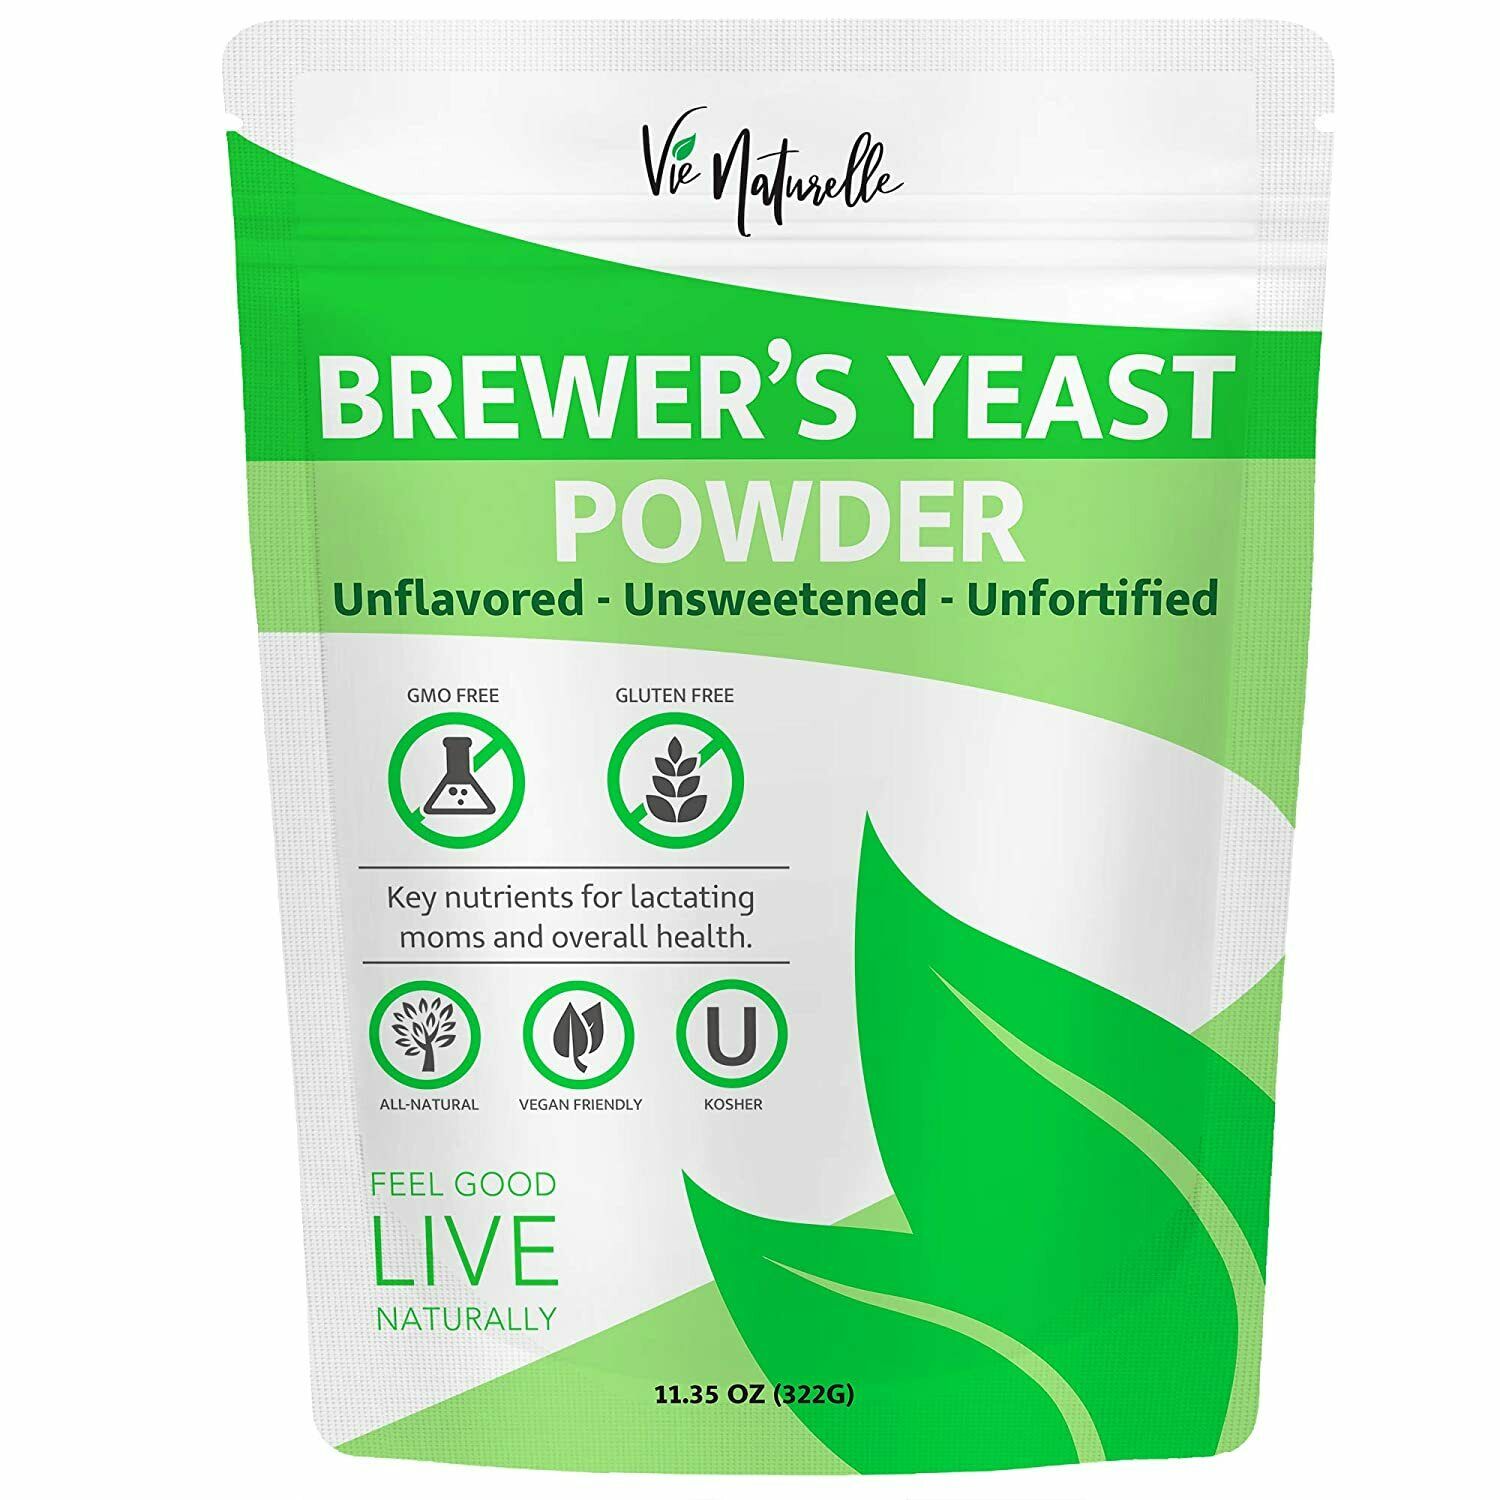 Brewers Yeast Powder Breastfeeding Supplement to Increase Mother's Milk - 12 oz